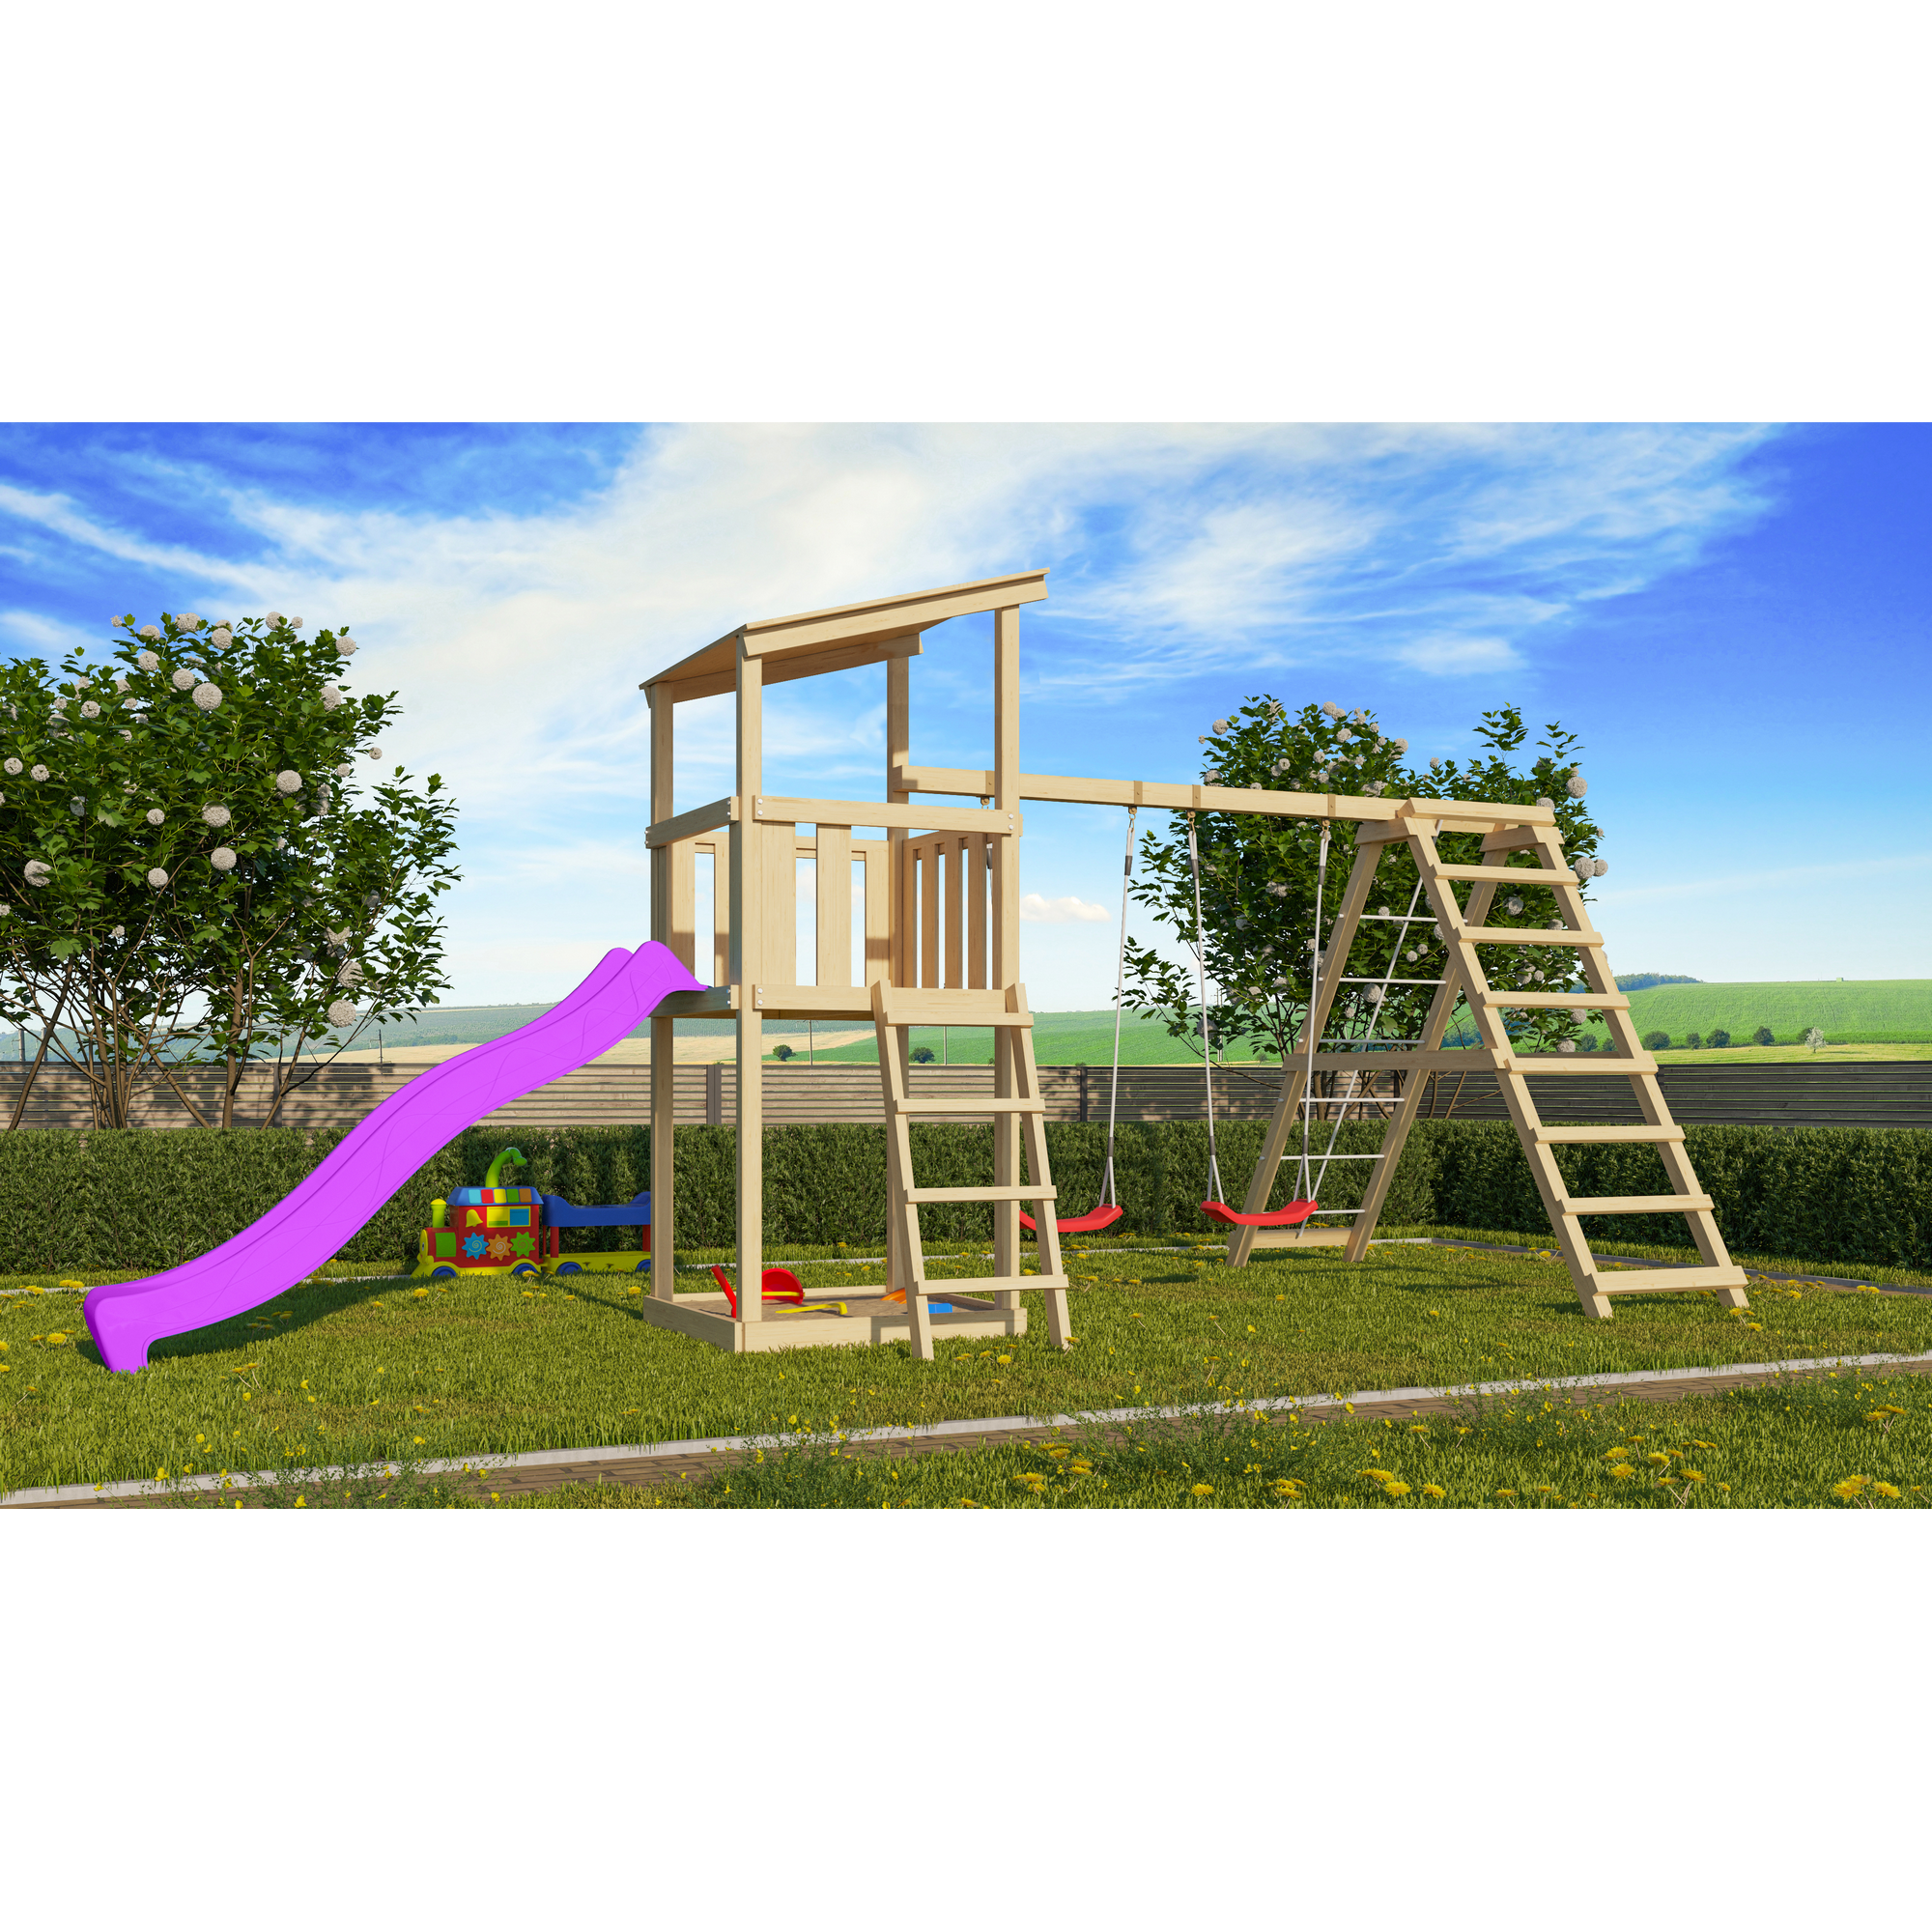 Spielturm 'Anna' Doppelschaukel, Klettergerüst, Rutsche violett, 415 x 264 x 270 cm + product picture